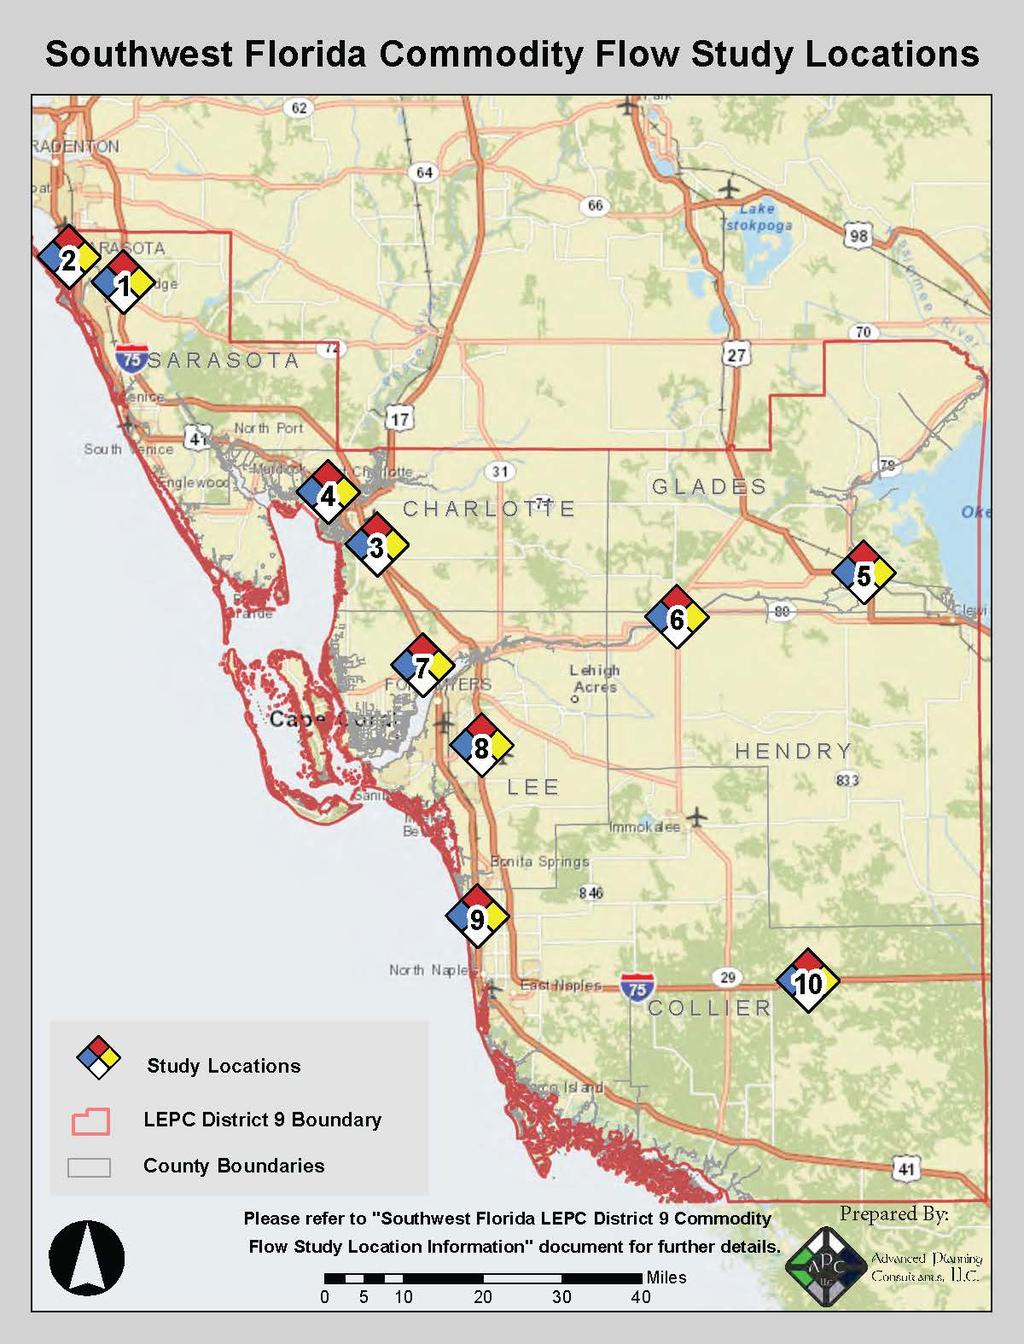 Southwest Florida LEPC District 9 Commodity Flow Study Location